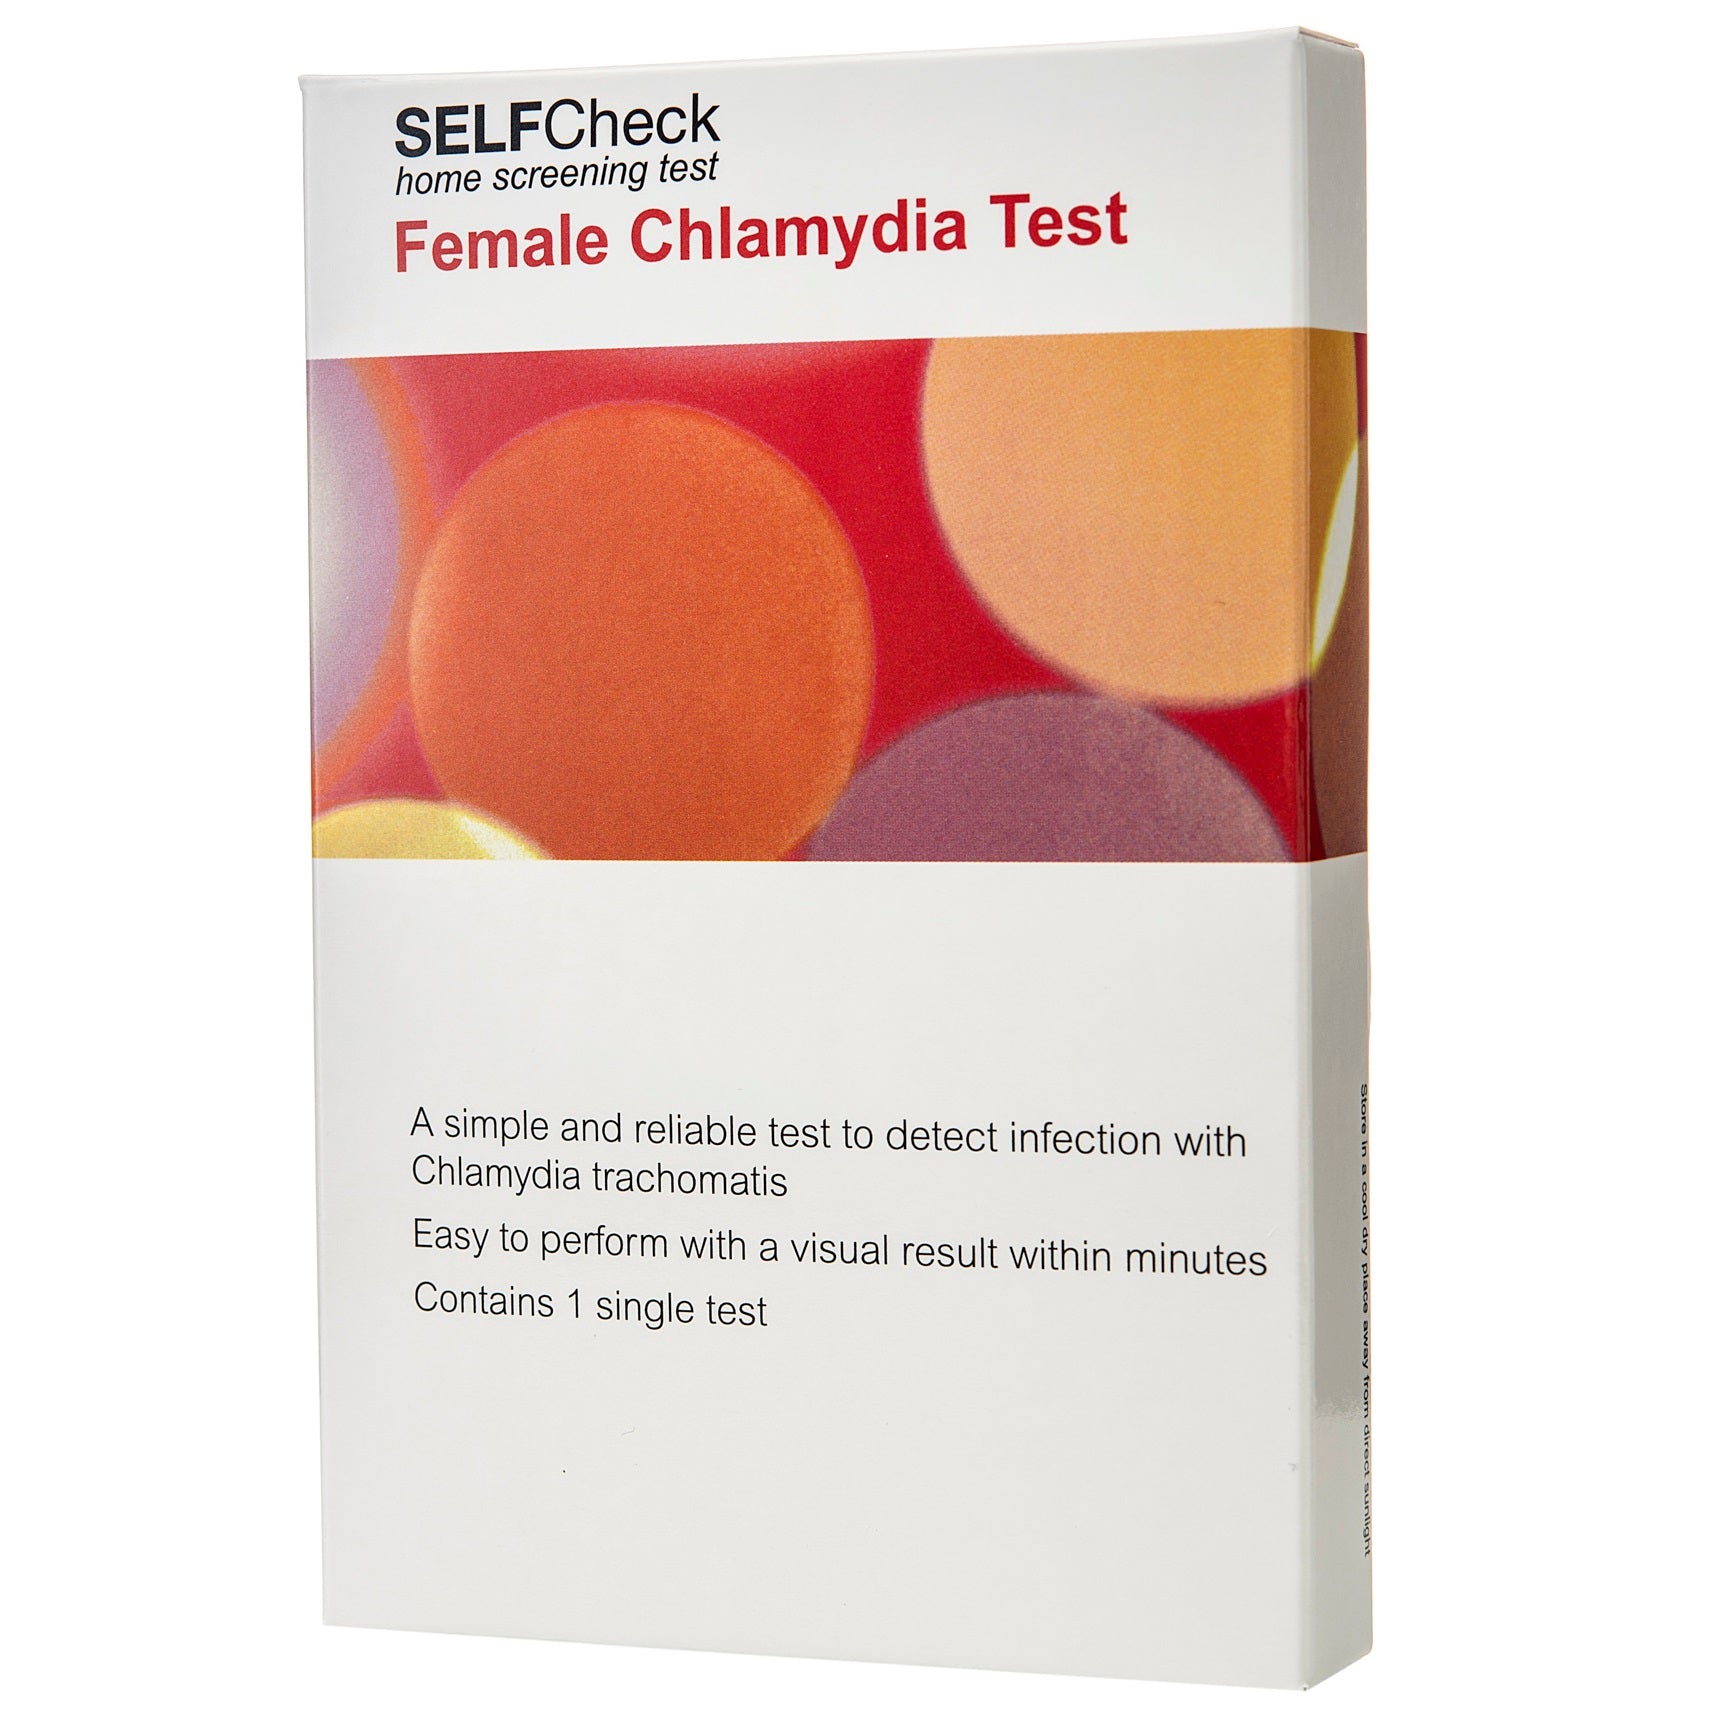 SELFCheck female chlamydia test kit